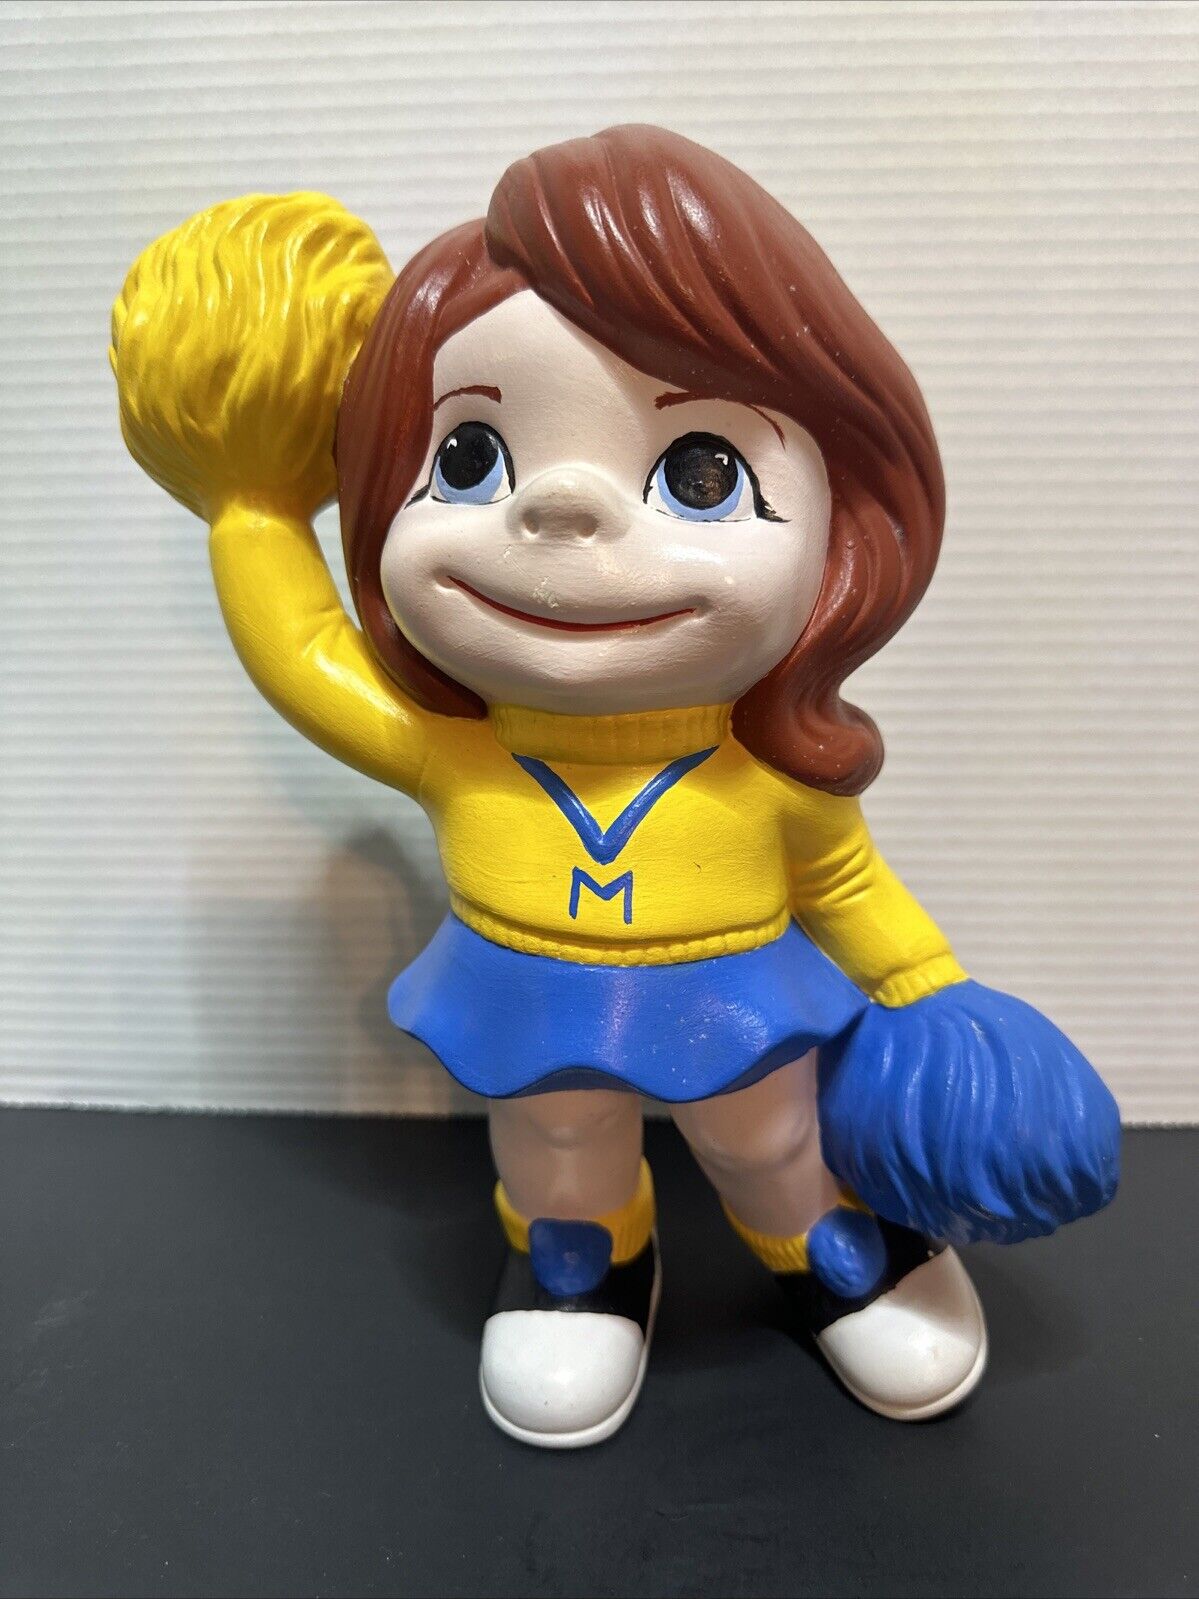 Vintage 1970s Smiley Ceramic Cheerleader Figure